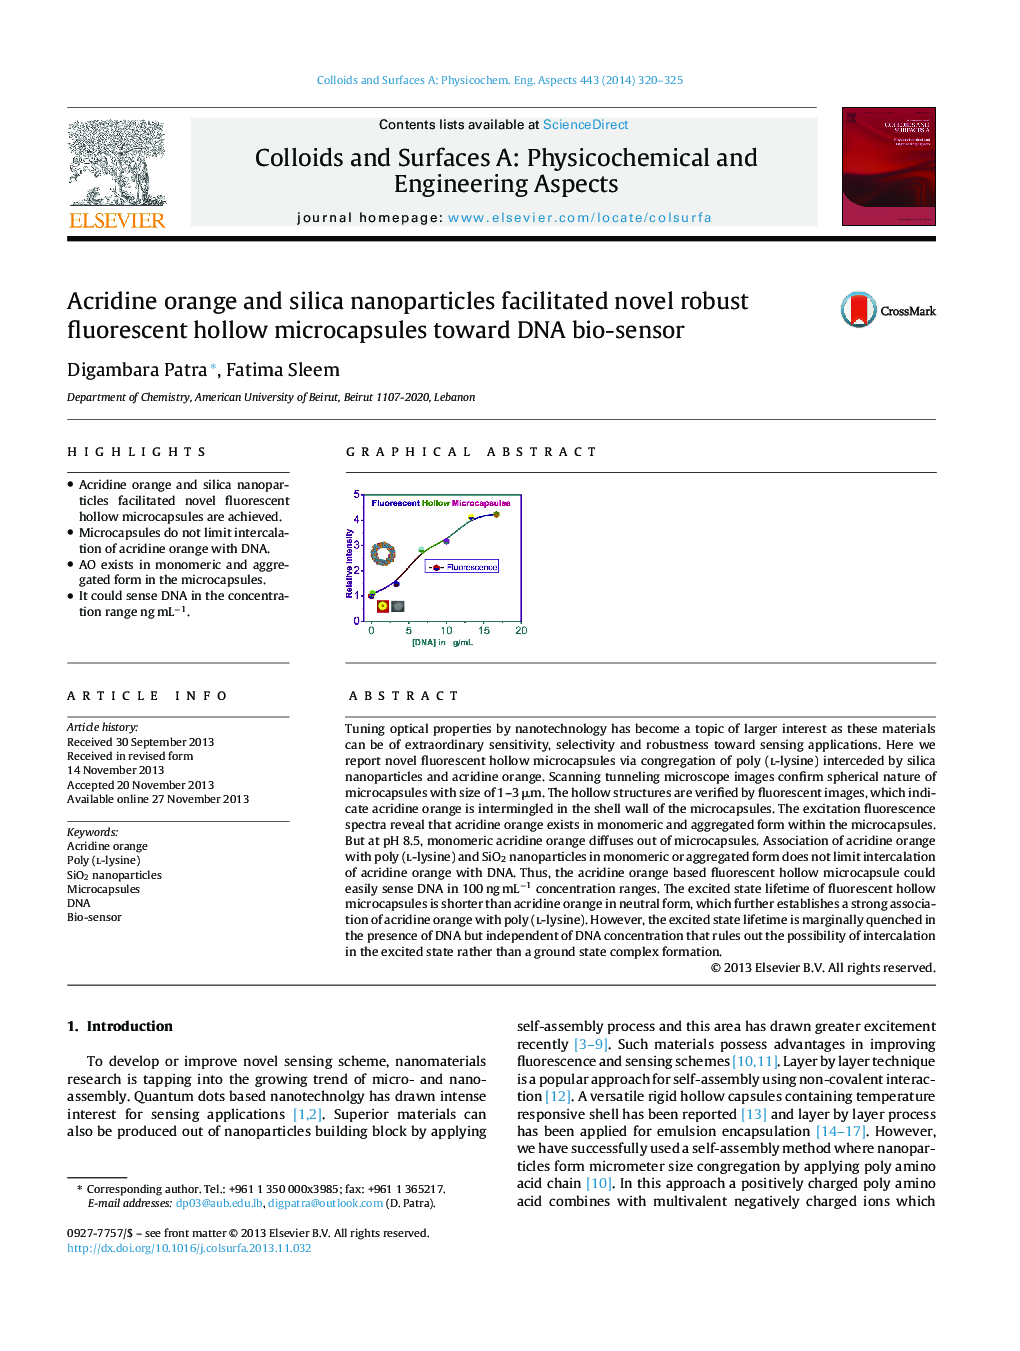 Acridine orange and silica nanoparticles facilitated novel robust fluorescent hollow microcapsules toward DNA bio-sensor